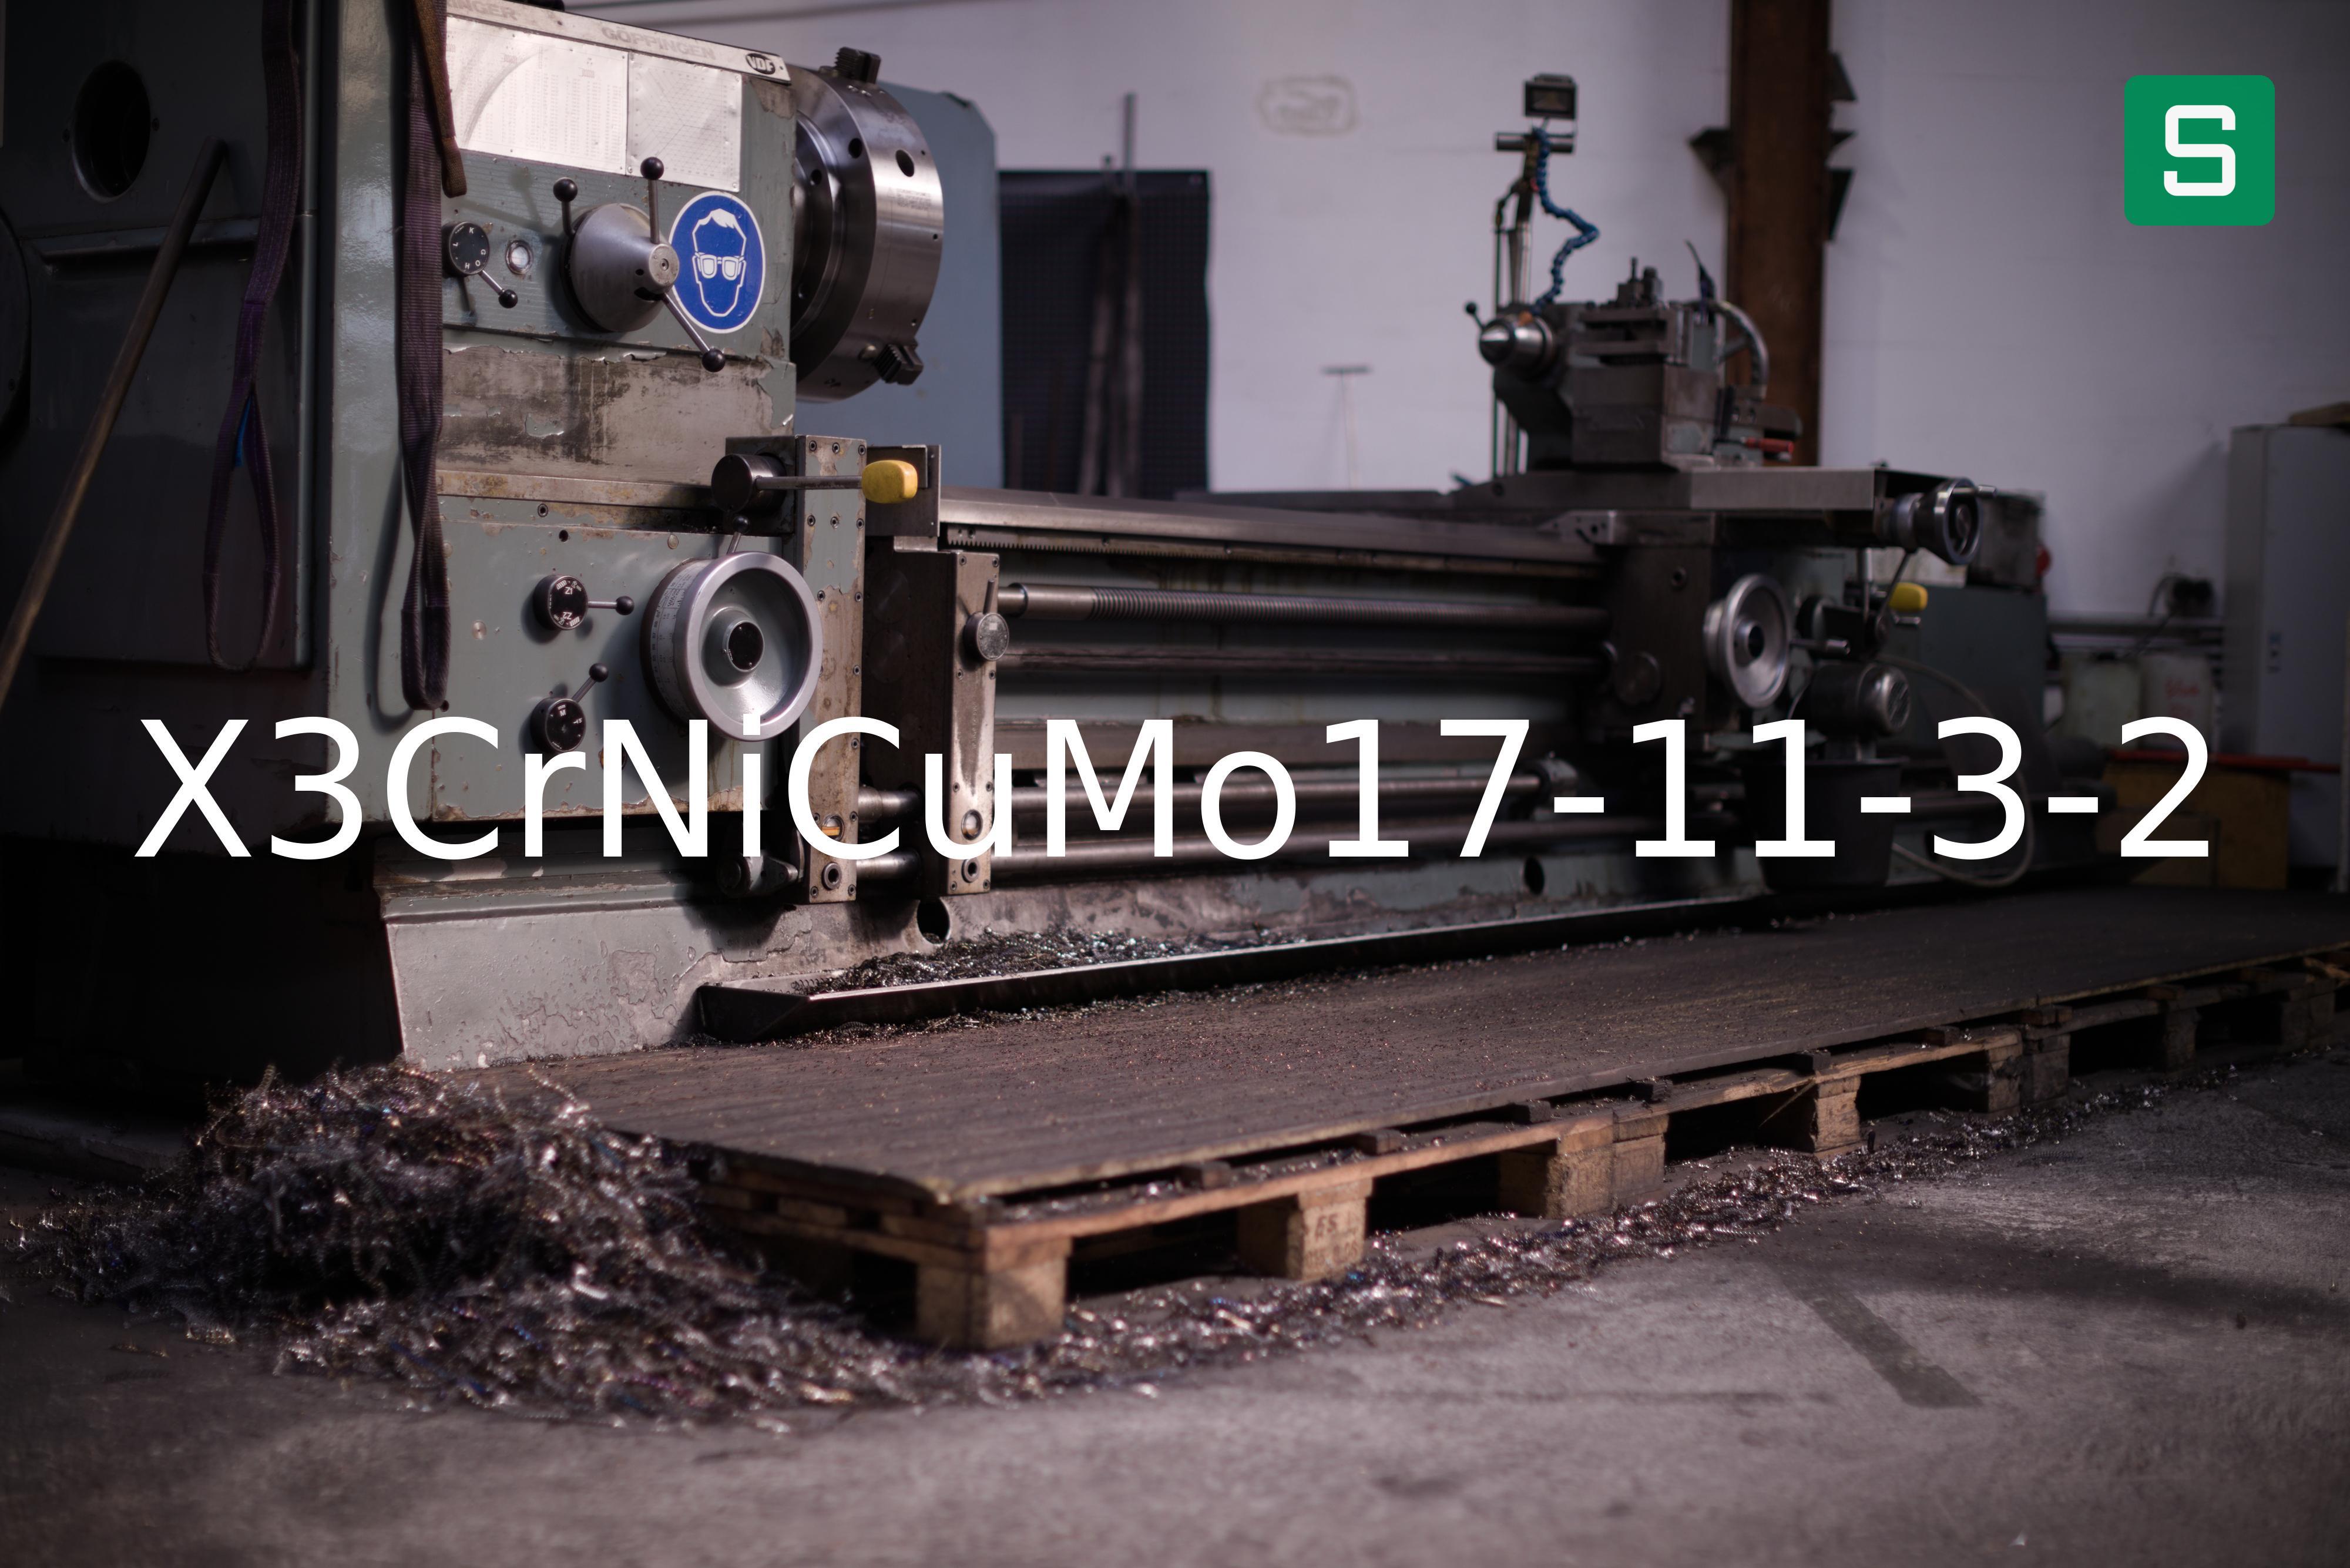 Steel Material: X3CrNiCuMo17-11-3-2